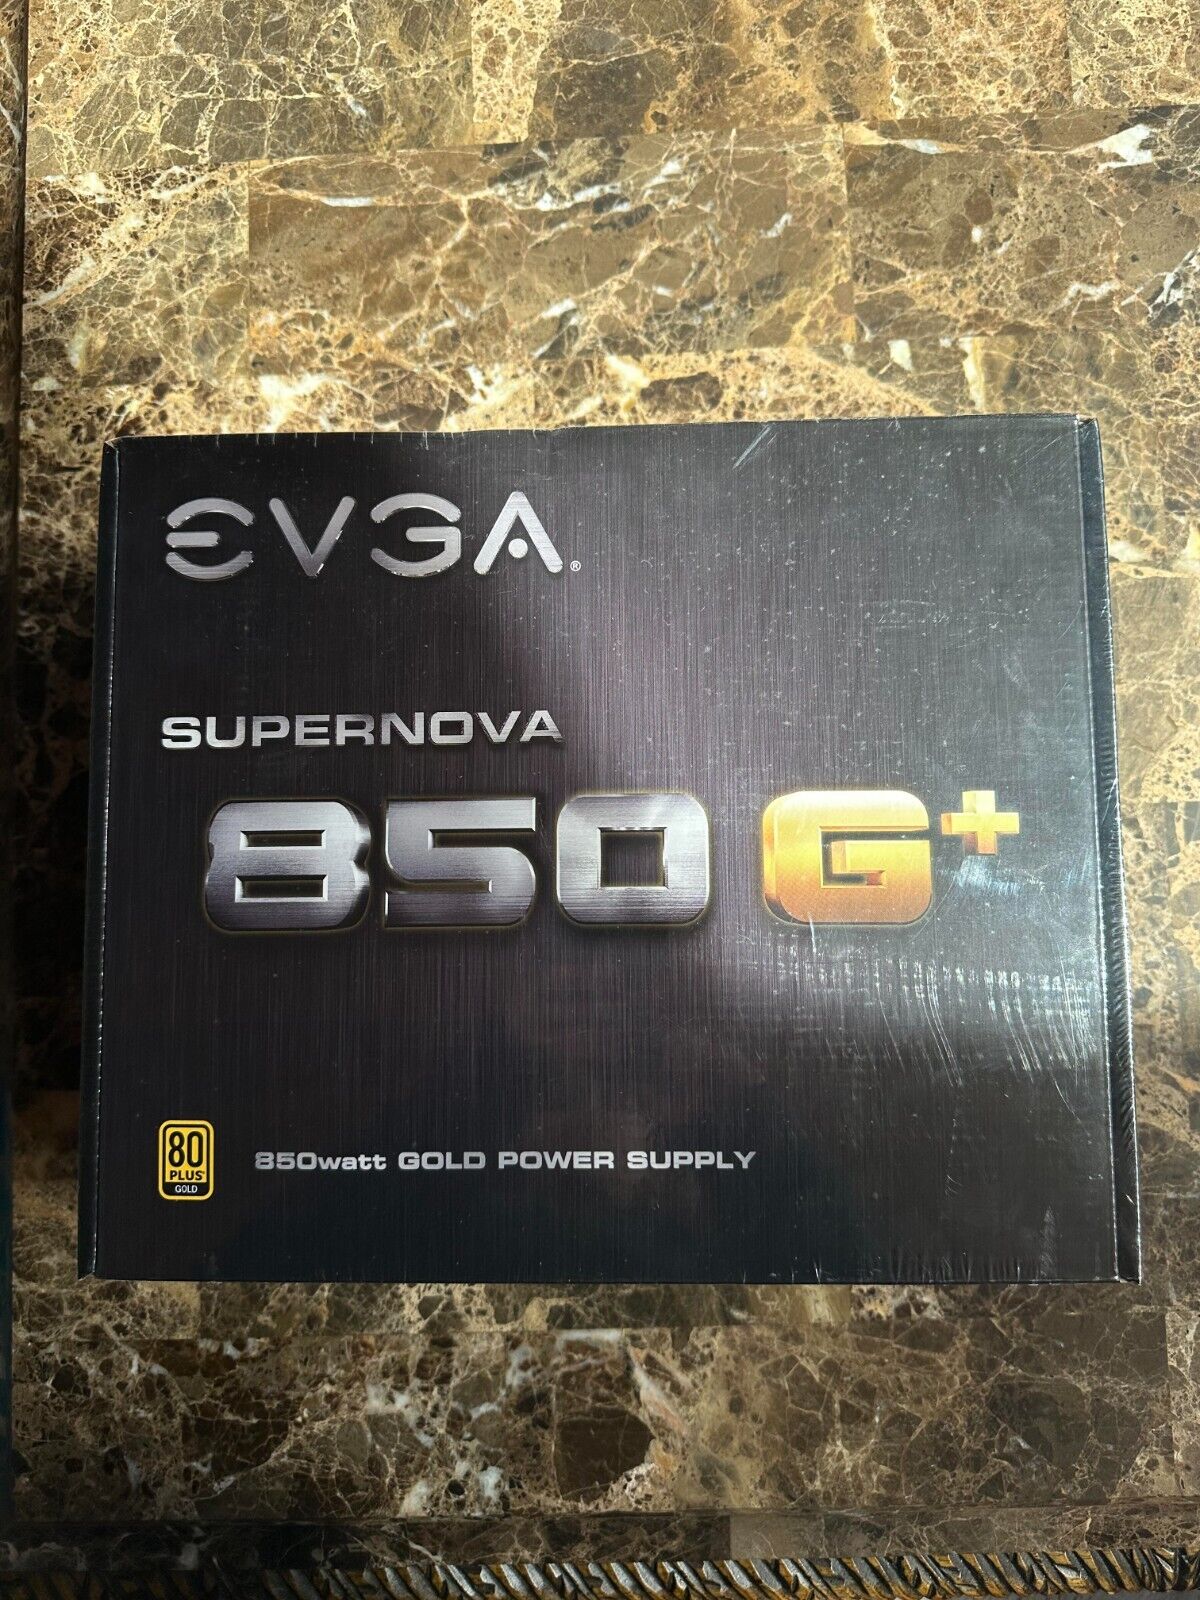 Sealed EVGA Supernova 850 G+ Gold Power Supply